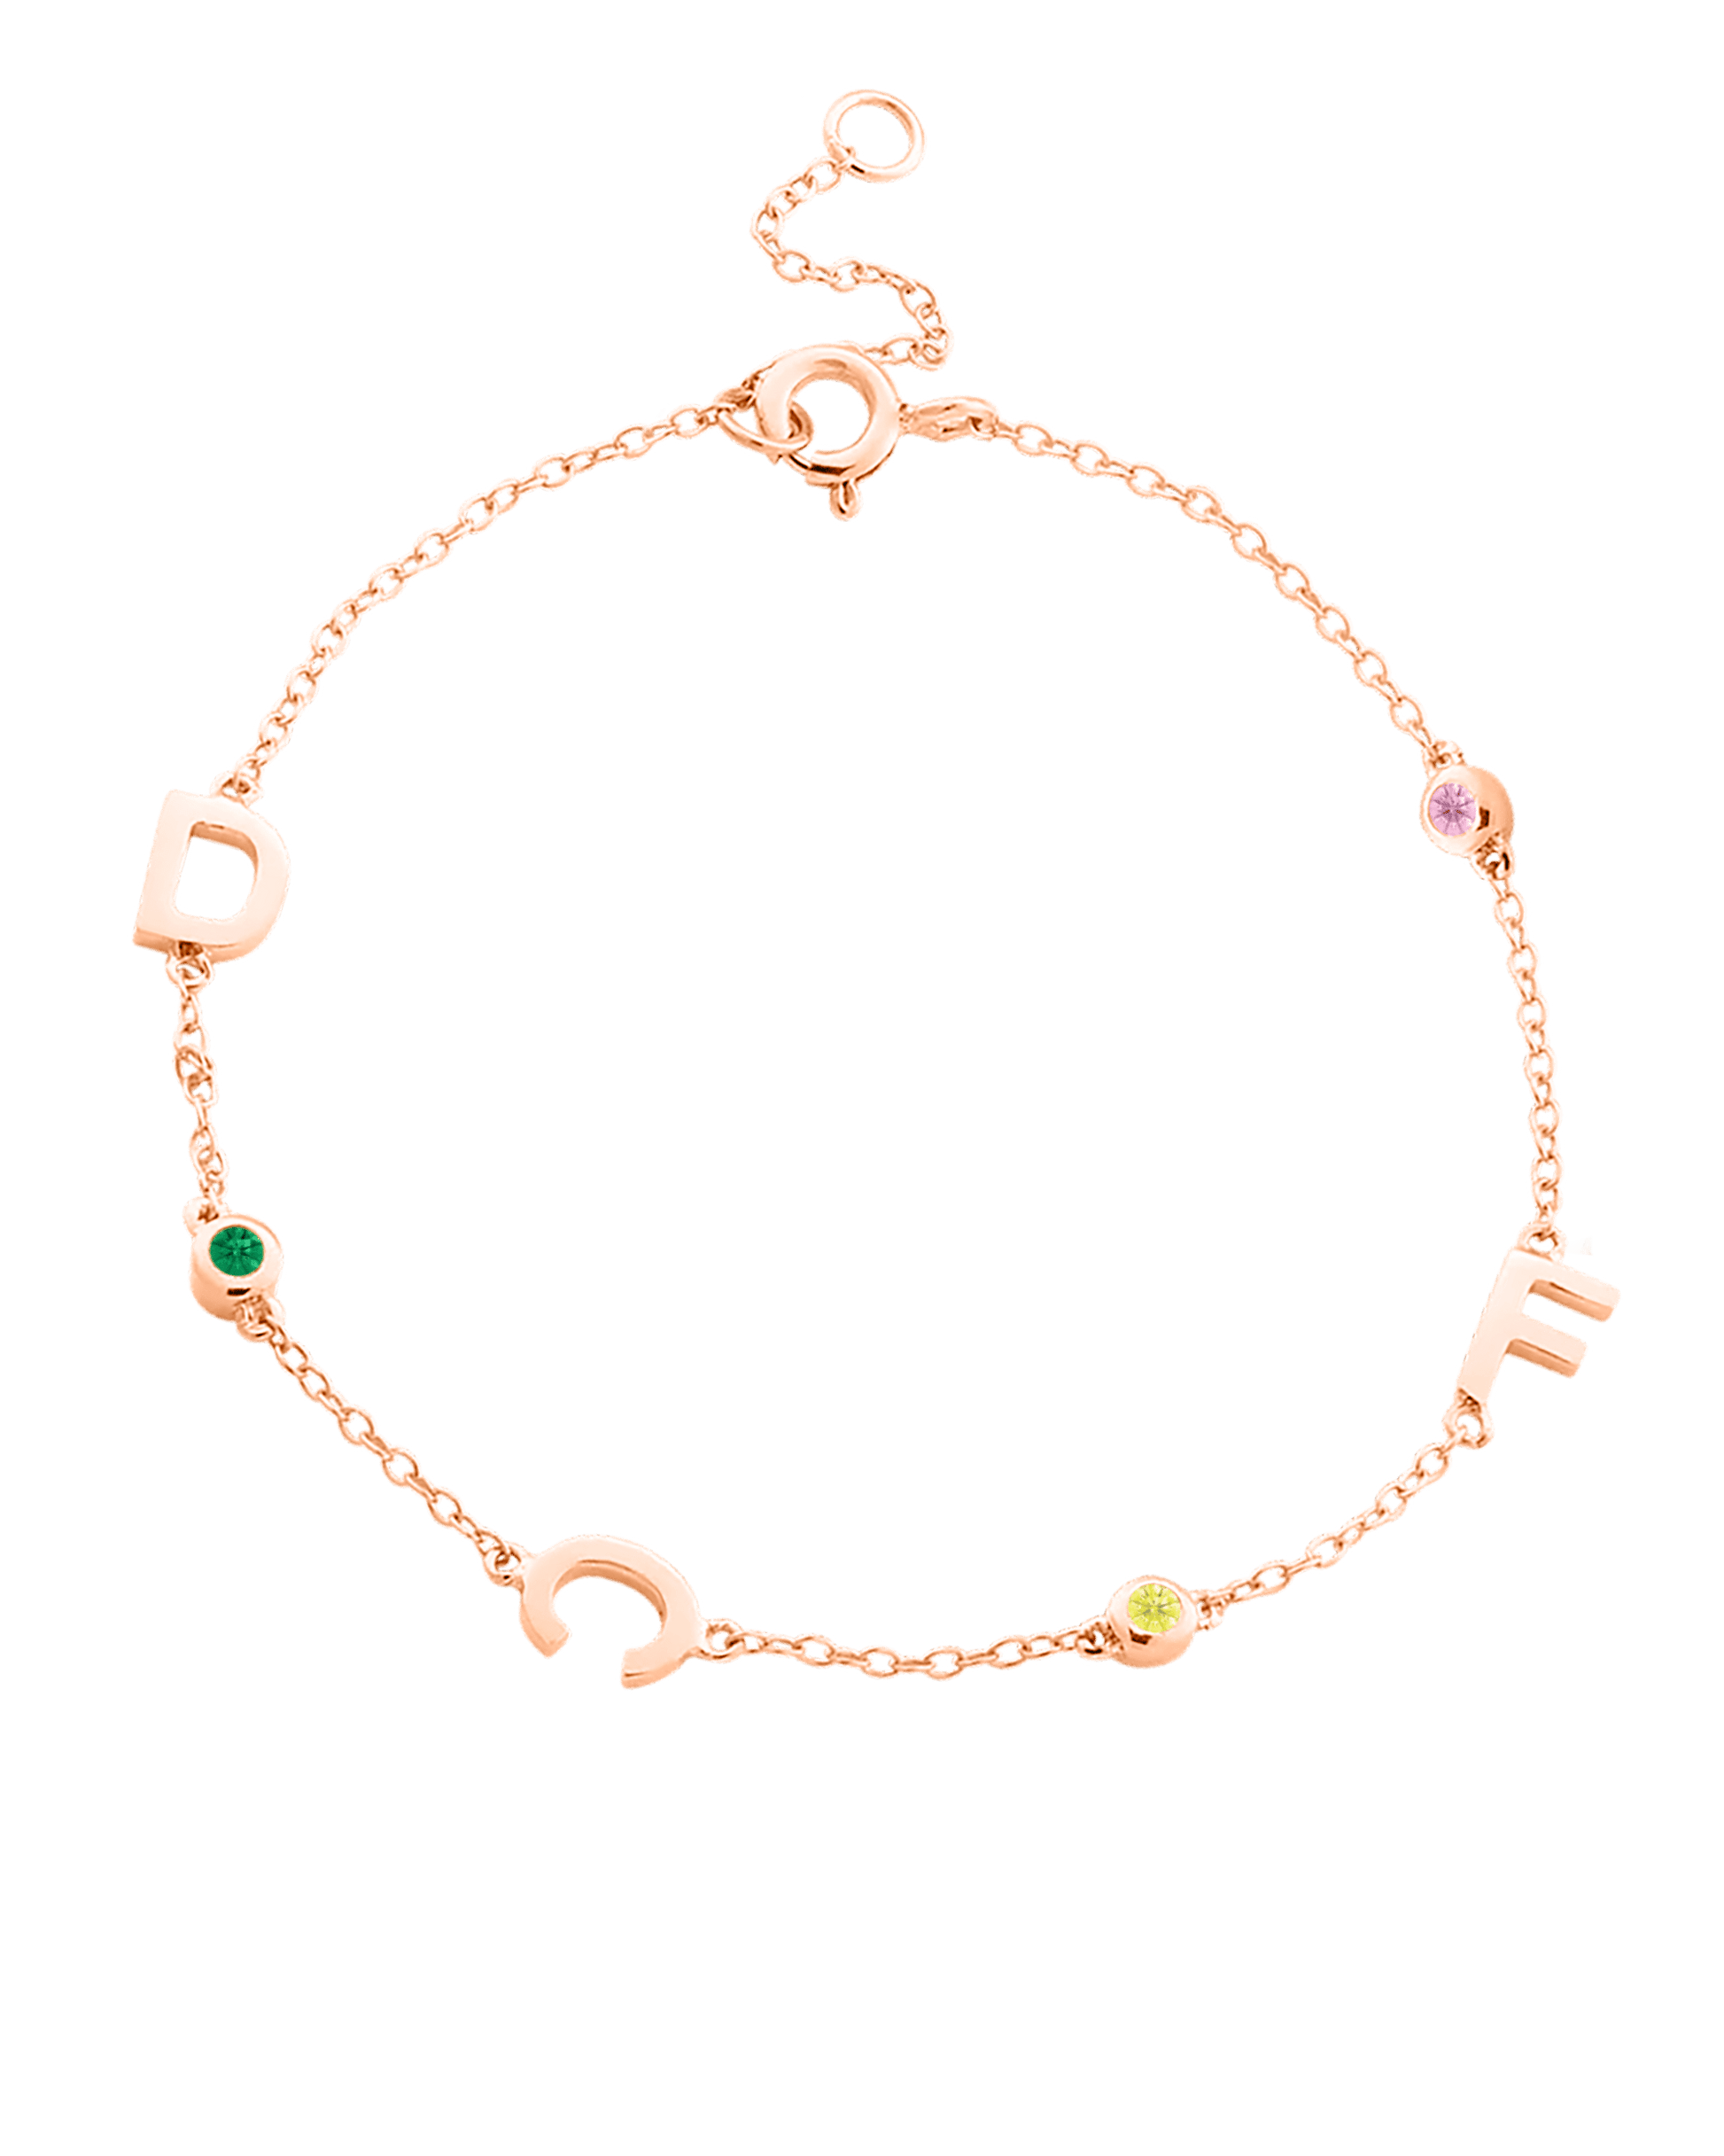 The Initial Birthstone Bracelet - 14K Yellow Gold Bracelets magal-dev 